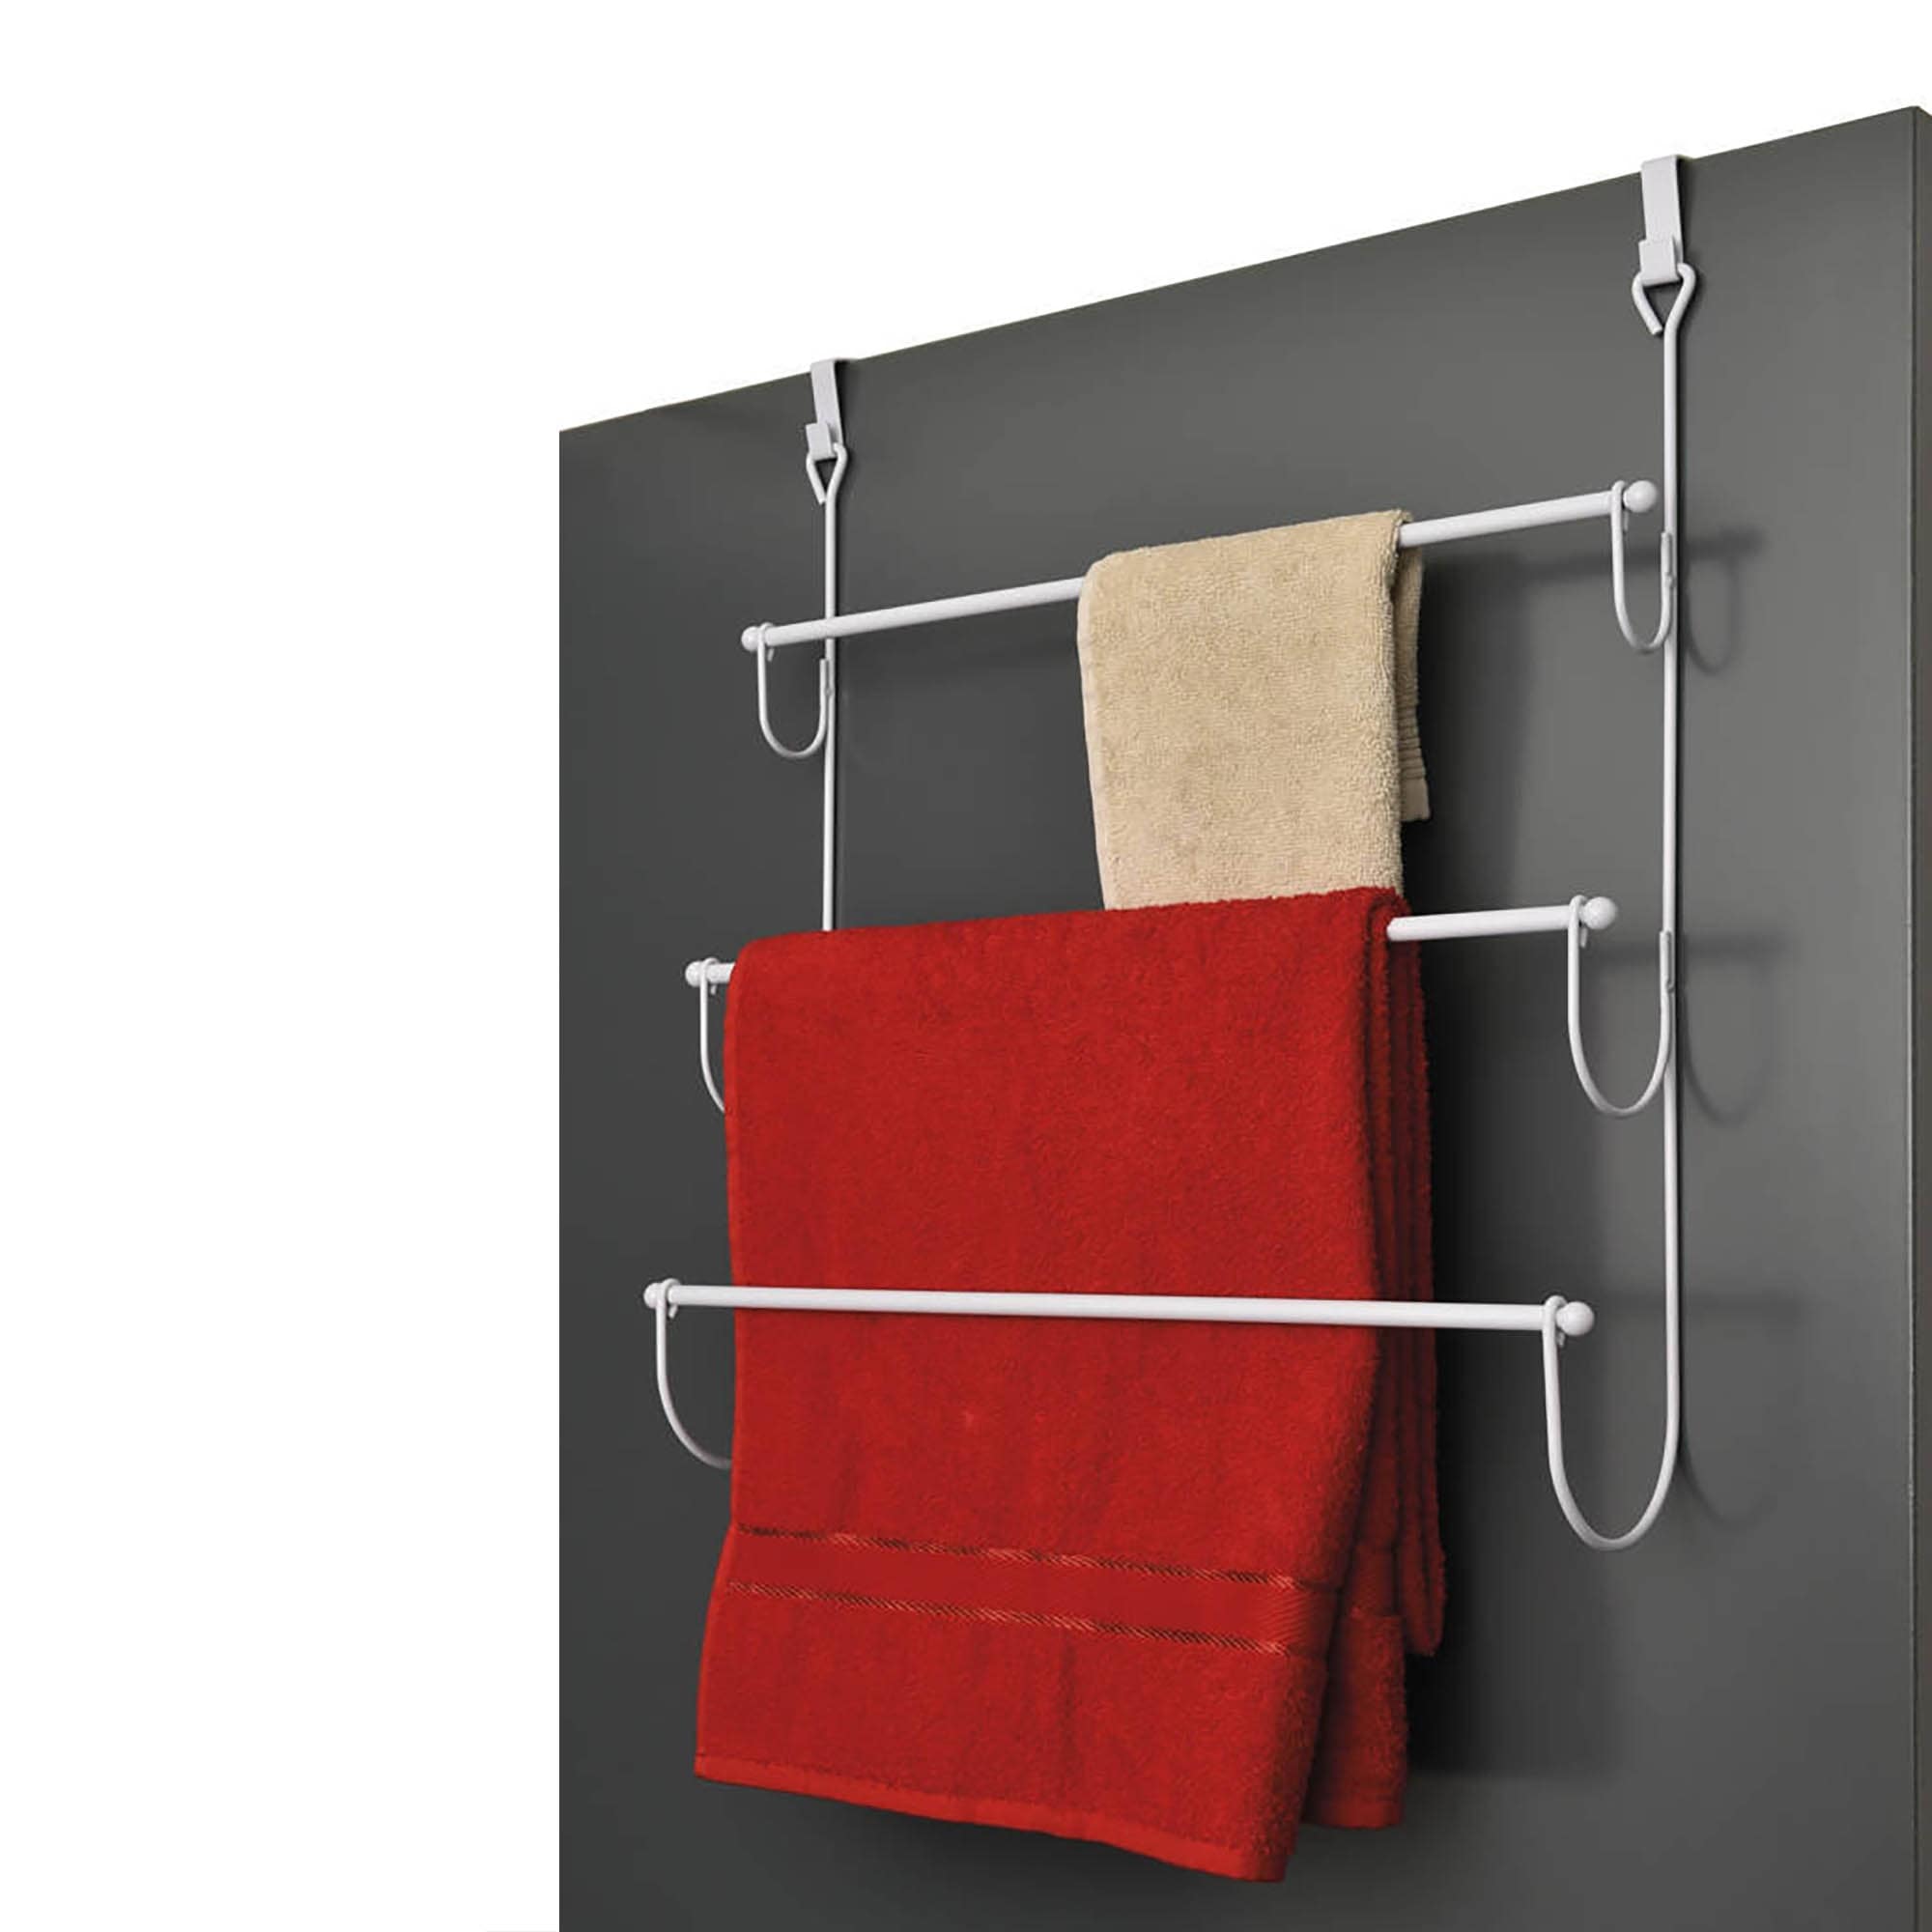 Home Interiors 3 Piece Metal Bathroom Towel Holders New In Original Box 